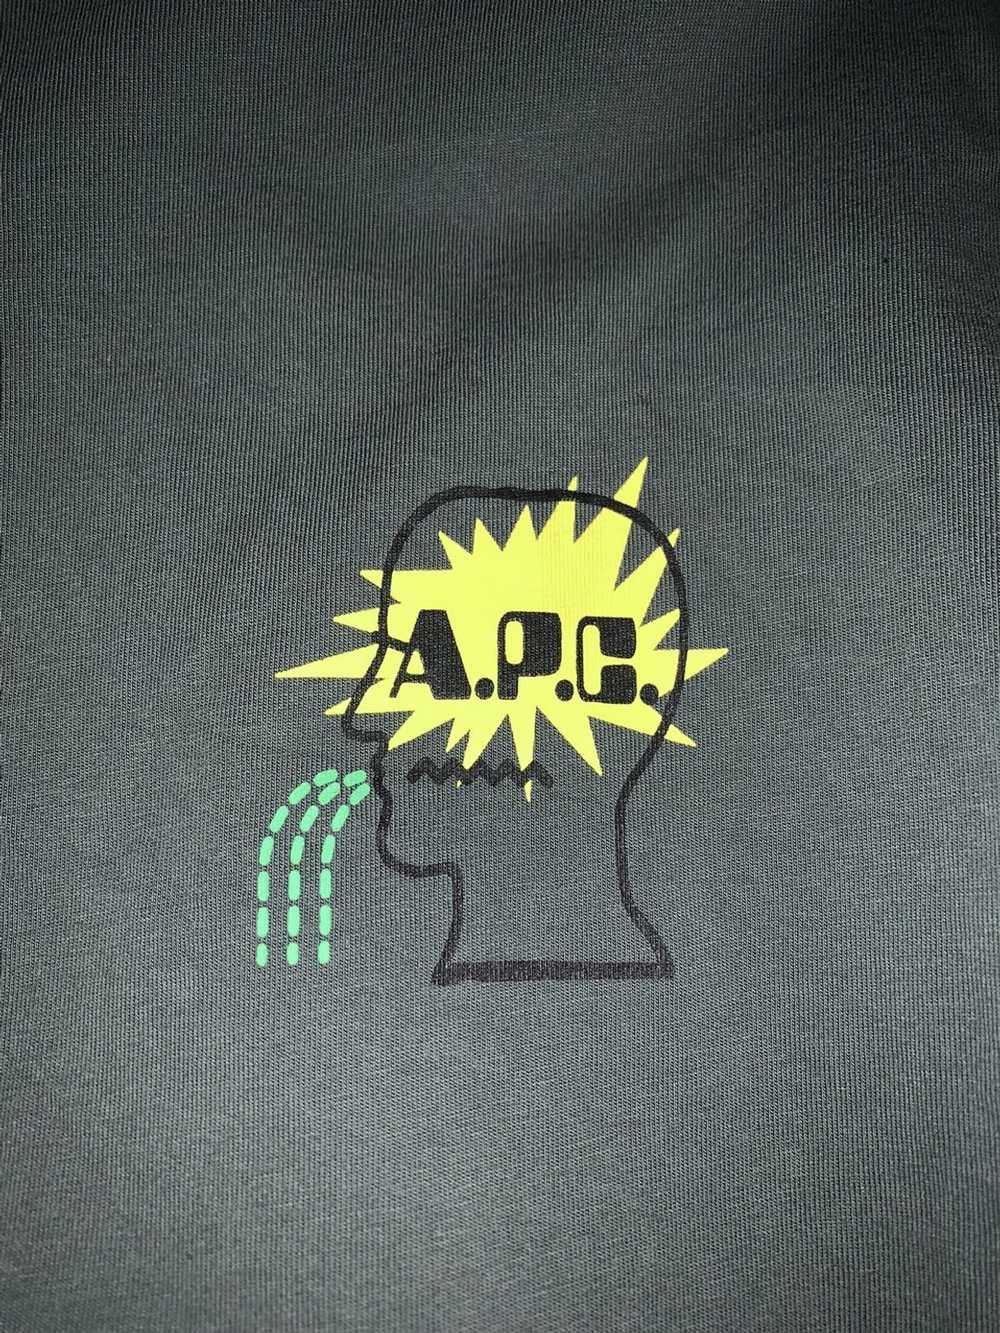 A.P.C. APC long sleeve Tee - image 2